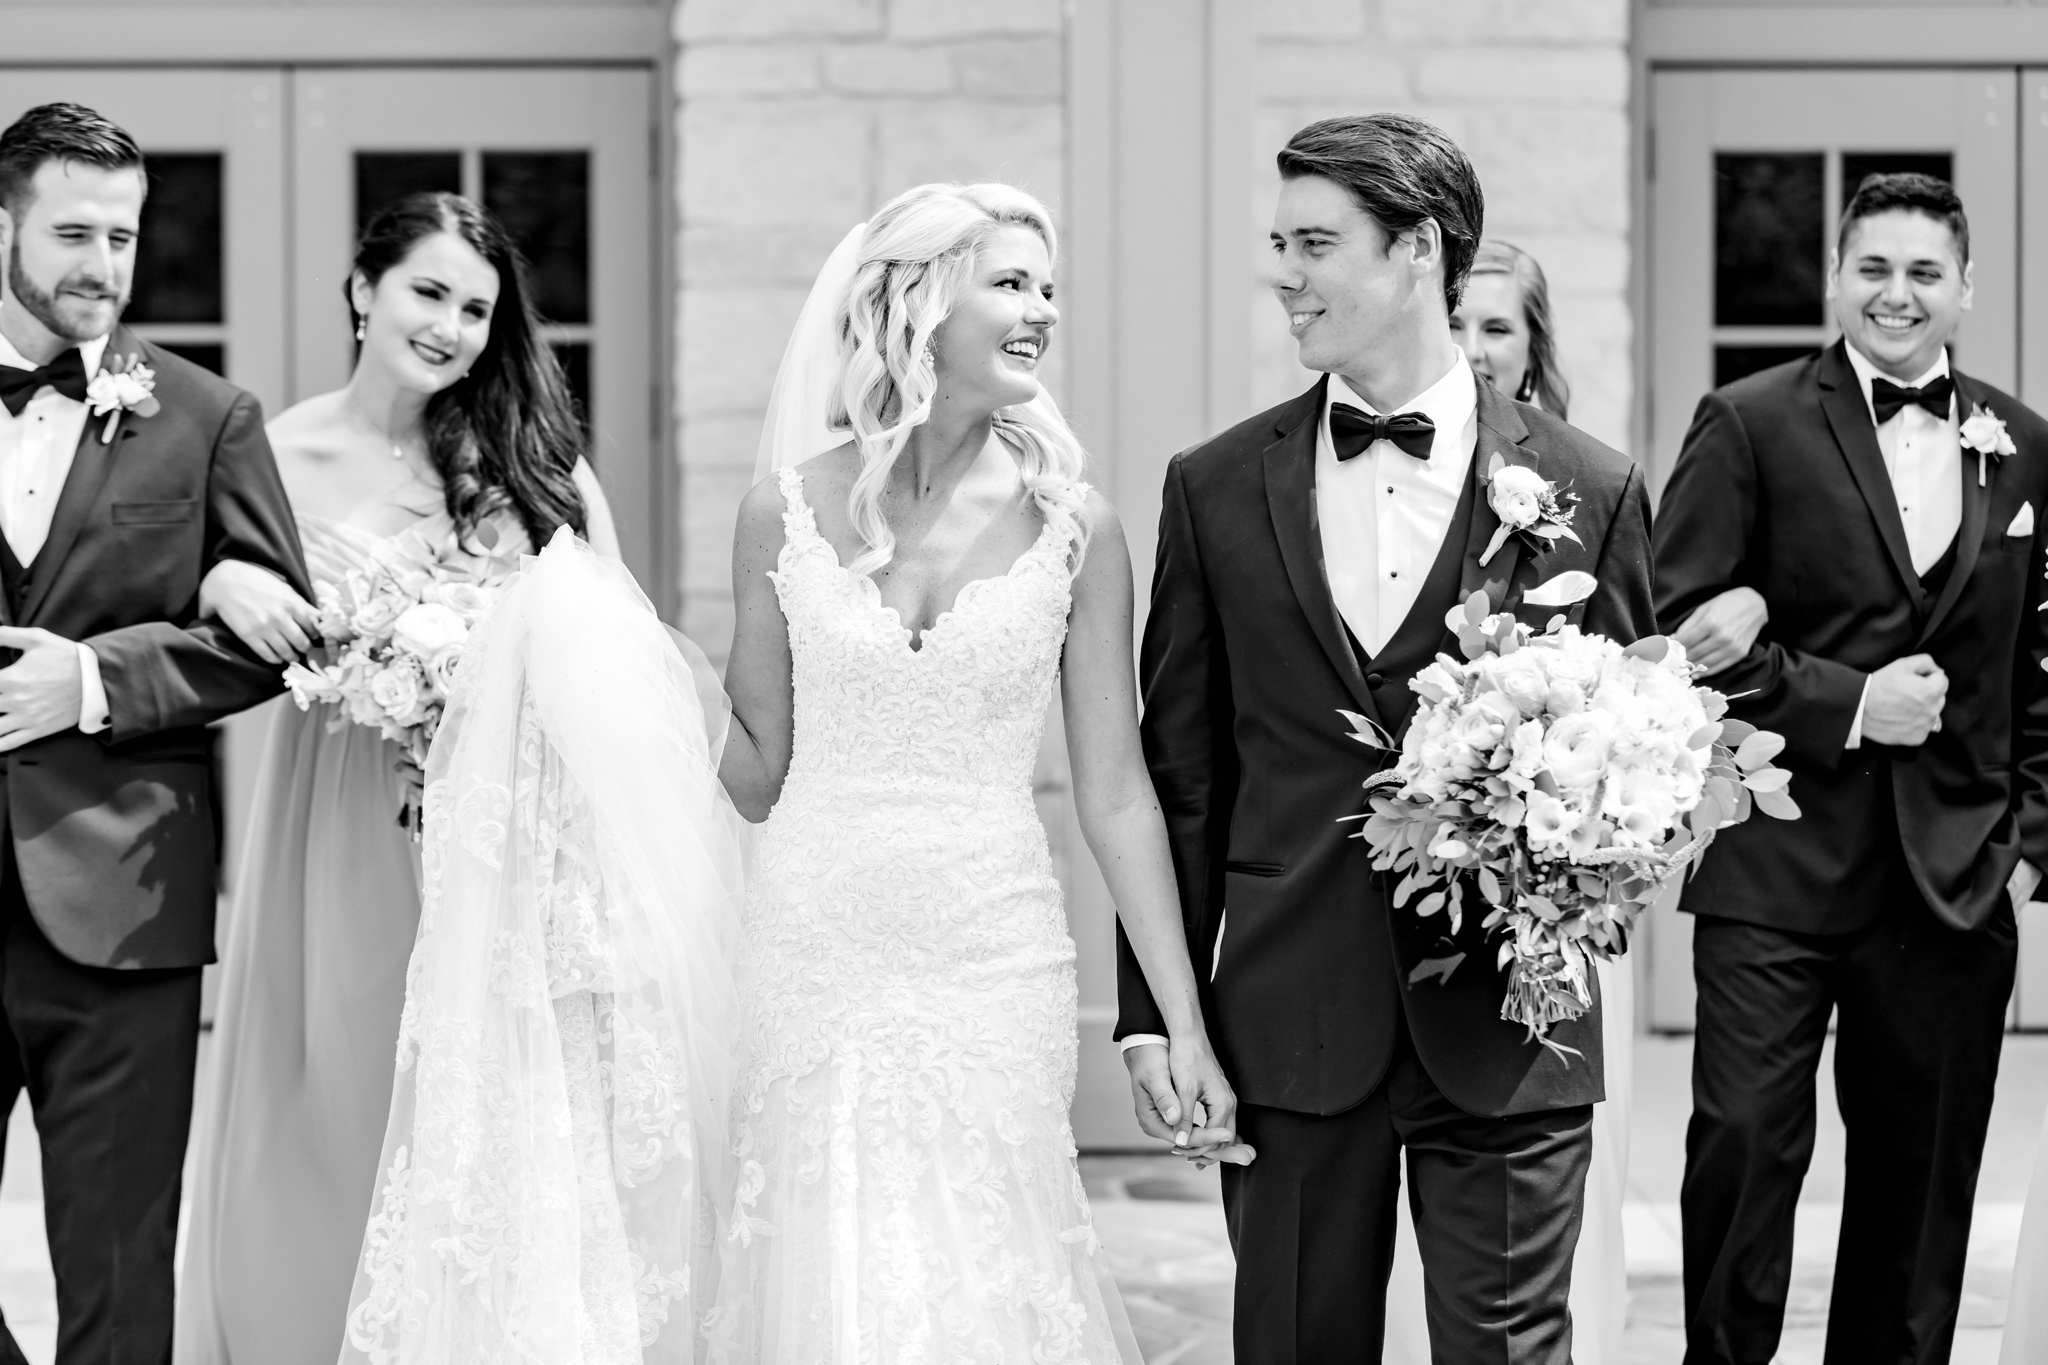 A Light Blue and Ivory Wedding at Hyatt Hill Country Resort in San Antonio, TX by Dawn Elizabeth Studios, San Antonio Wedding Photographer